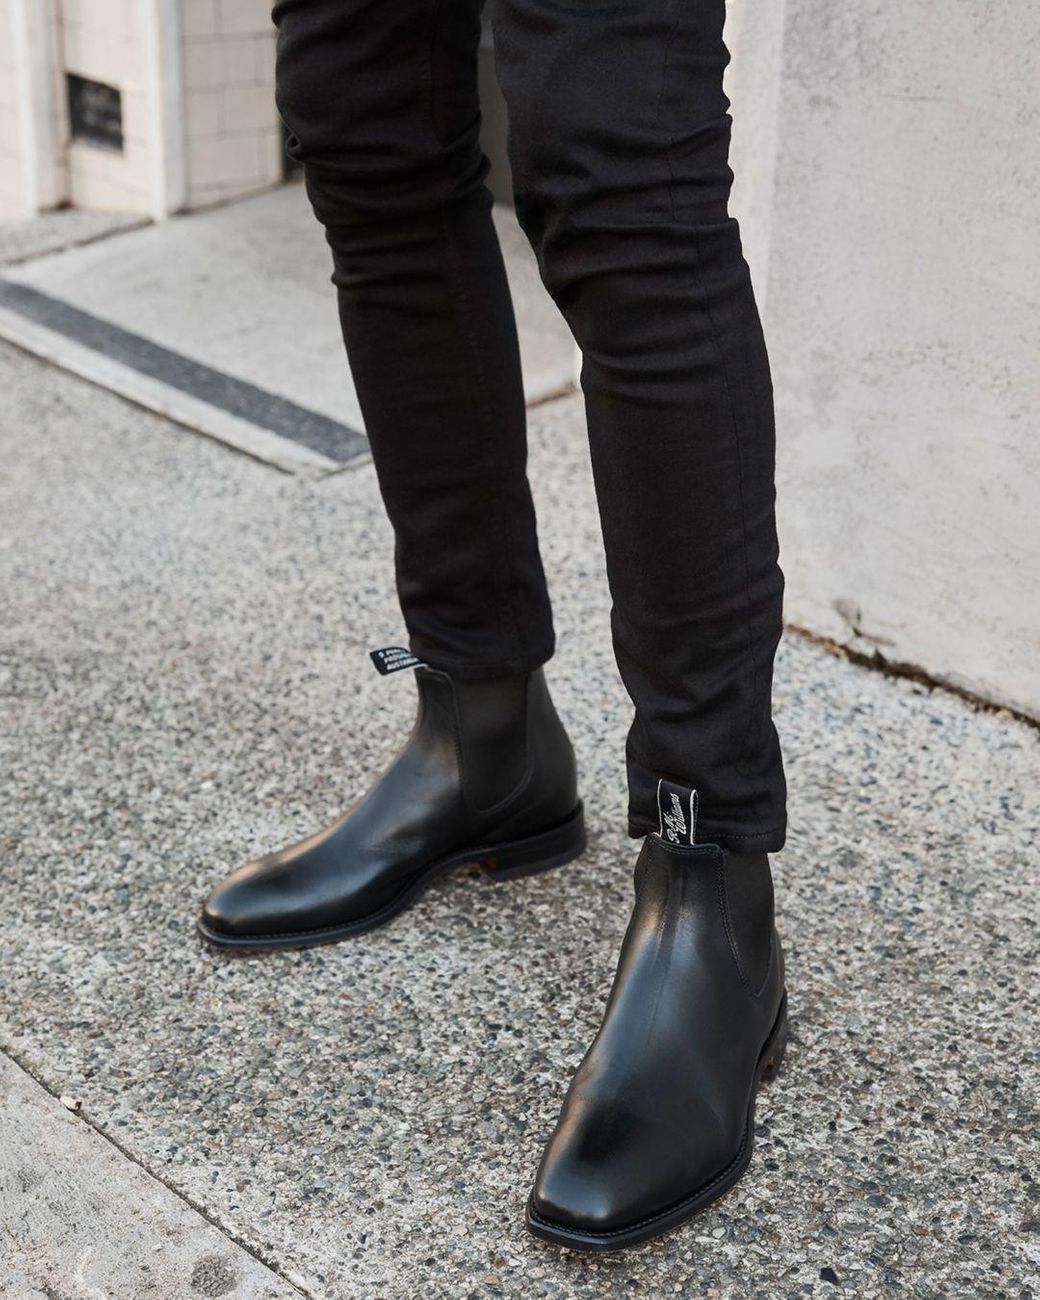 craftsman black boots